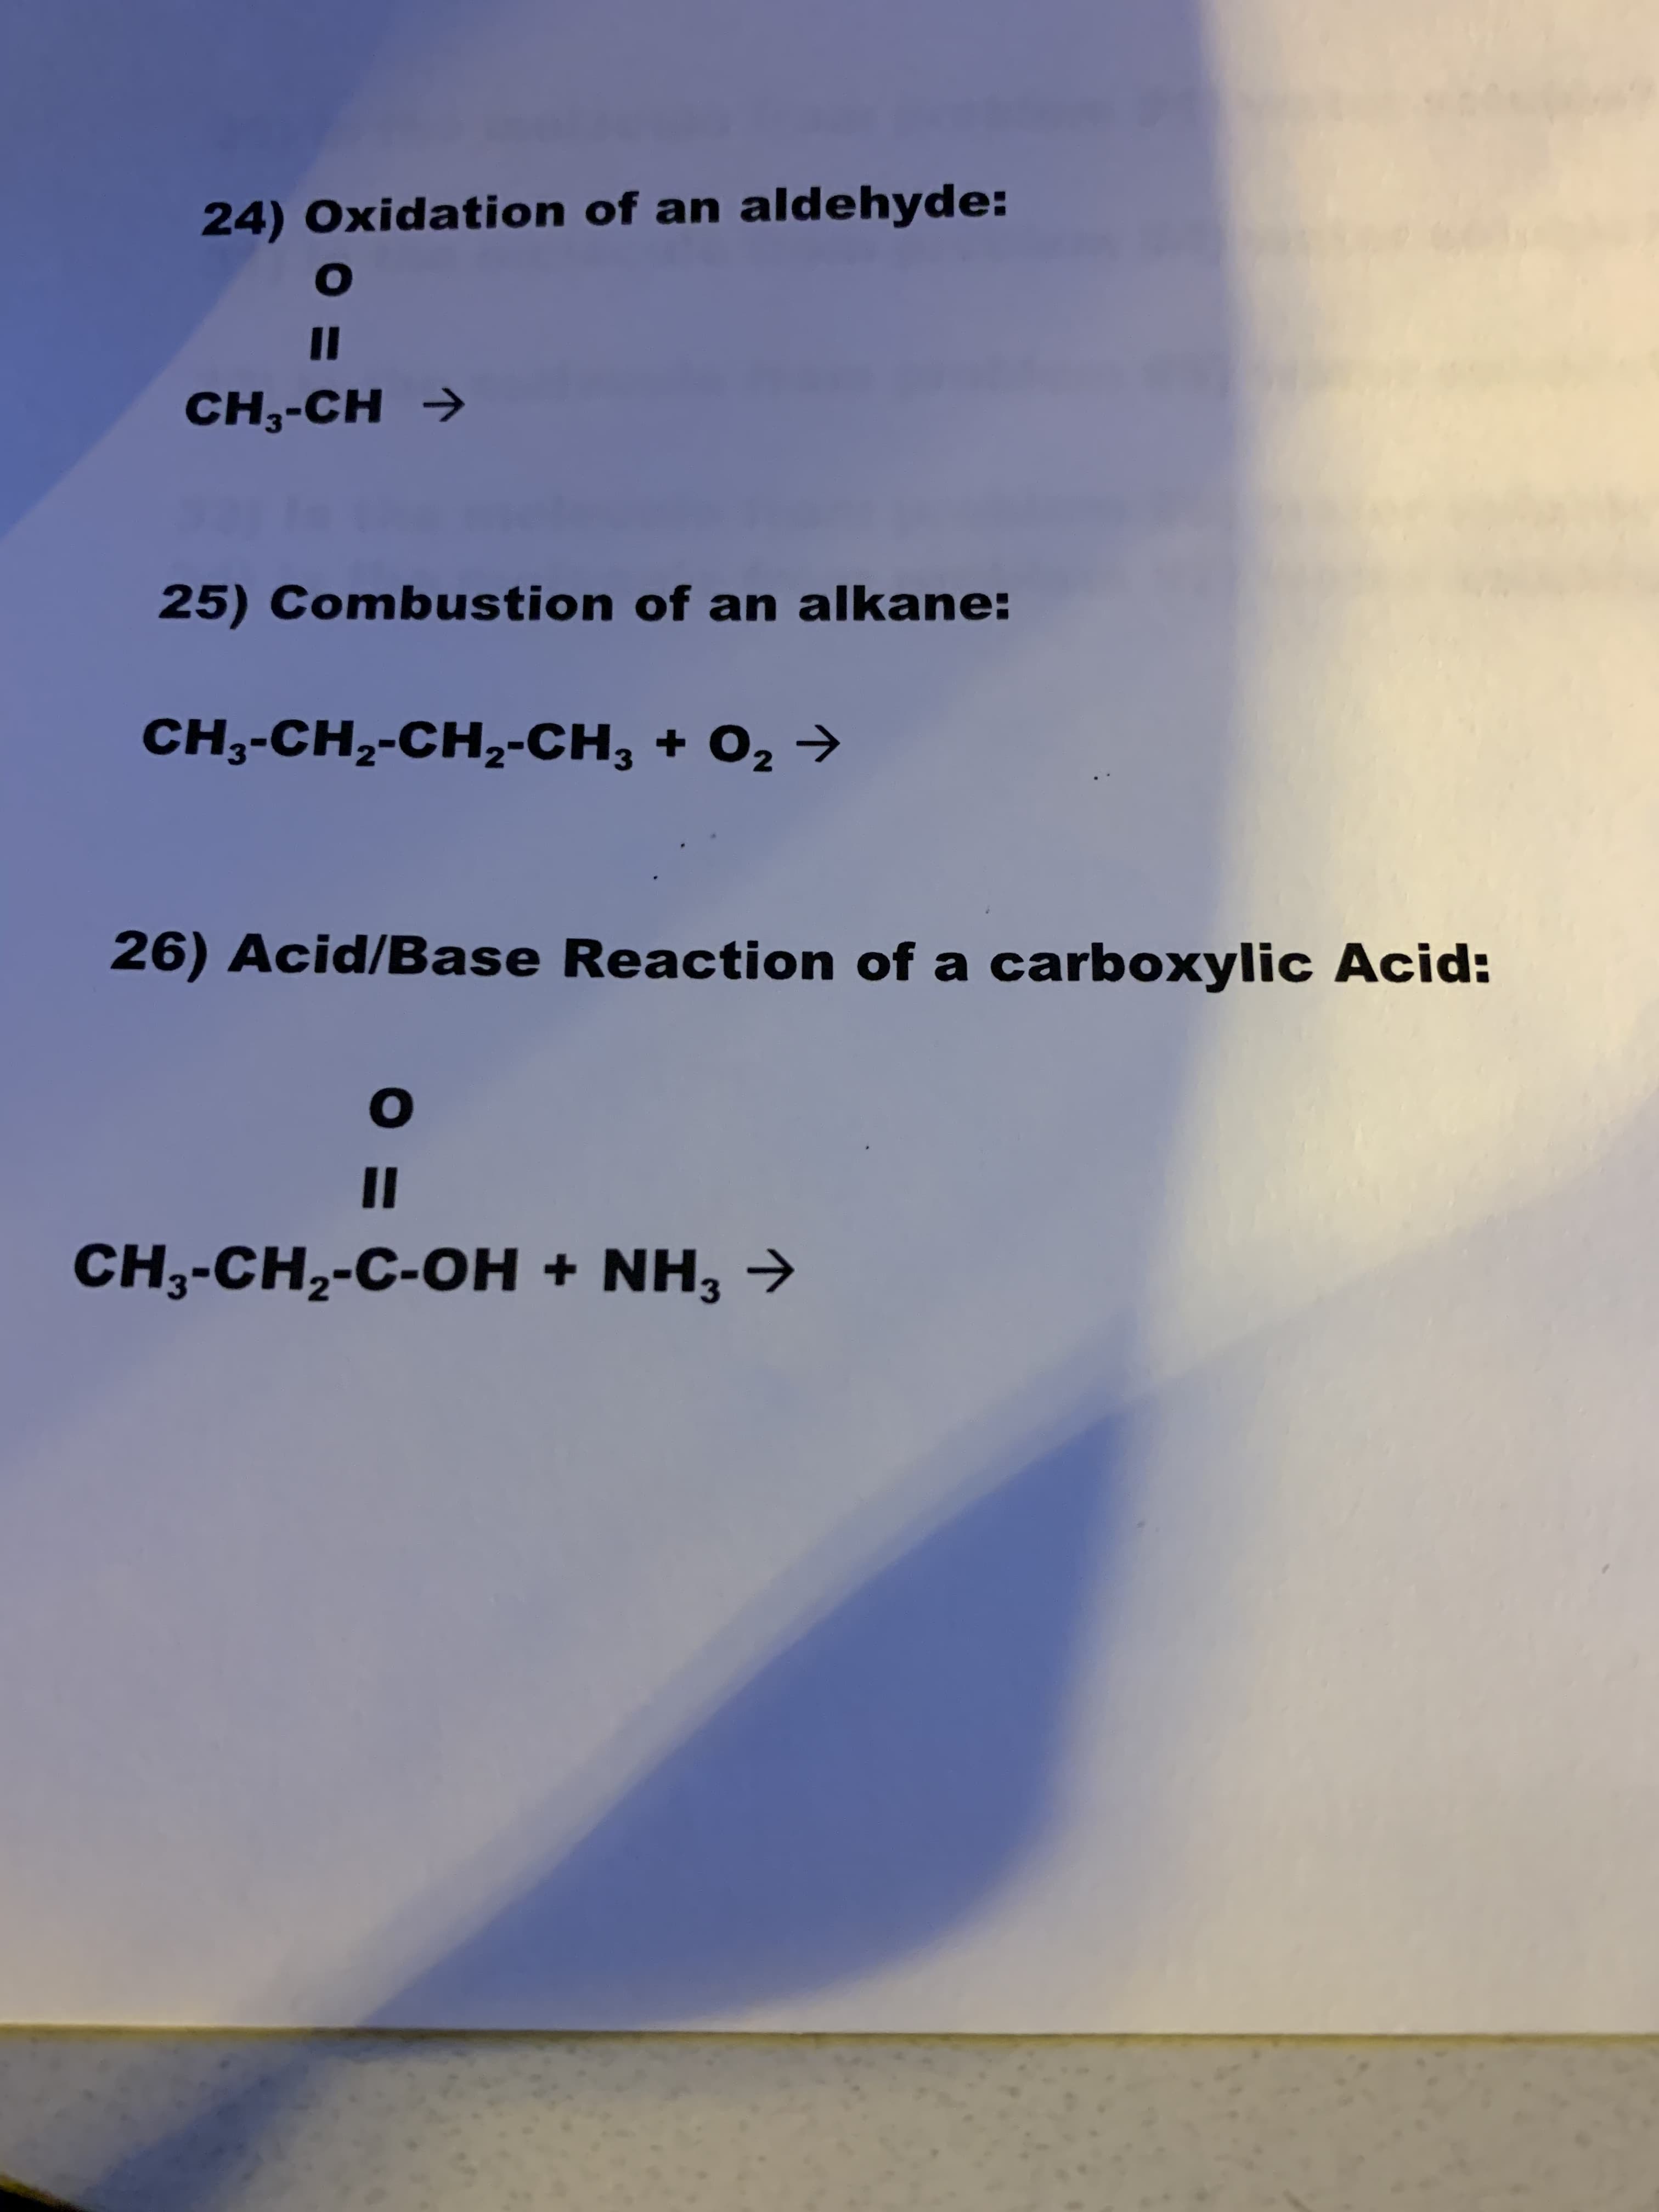 24) Oxidation of an aldehyde:
O
II
CH,-CH
25) Combustion of an alkane:
CH3-CH2-CH2-CH3 + O2
26) Acid/Base Reaction of a carboxylic Acid:
O
1I
CH3-CH2-C-OH + NH3
